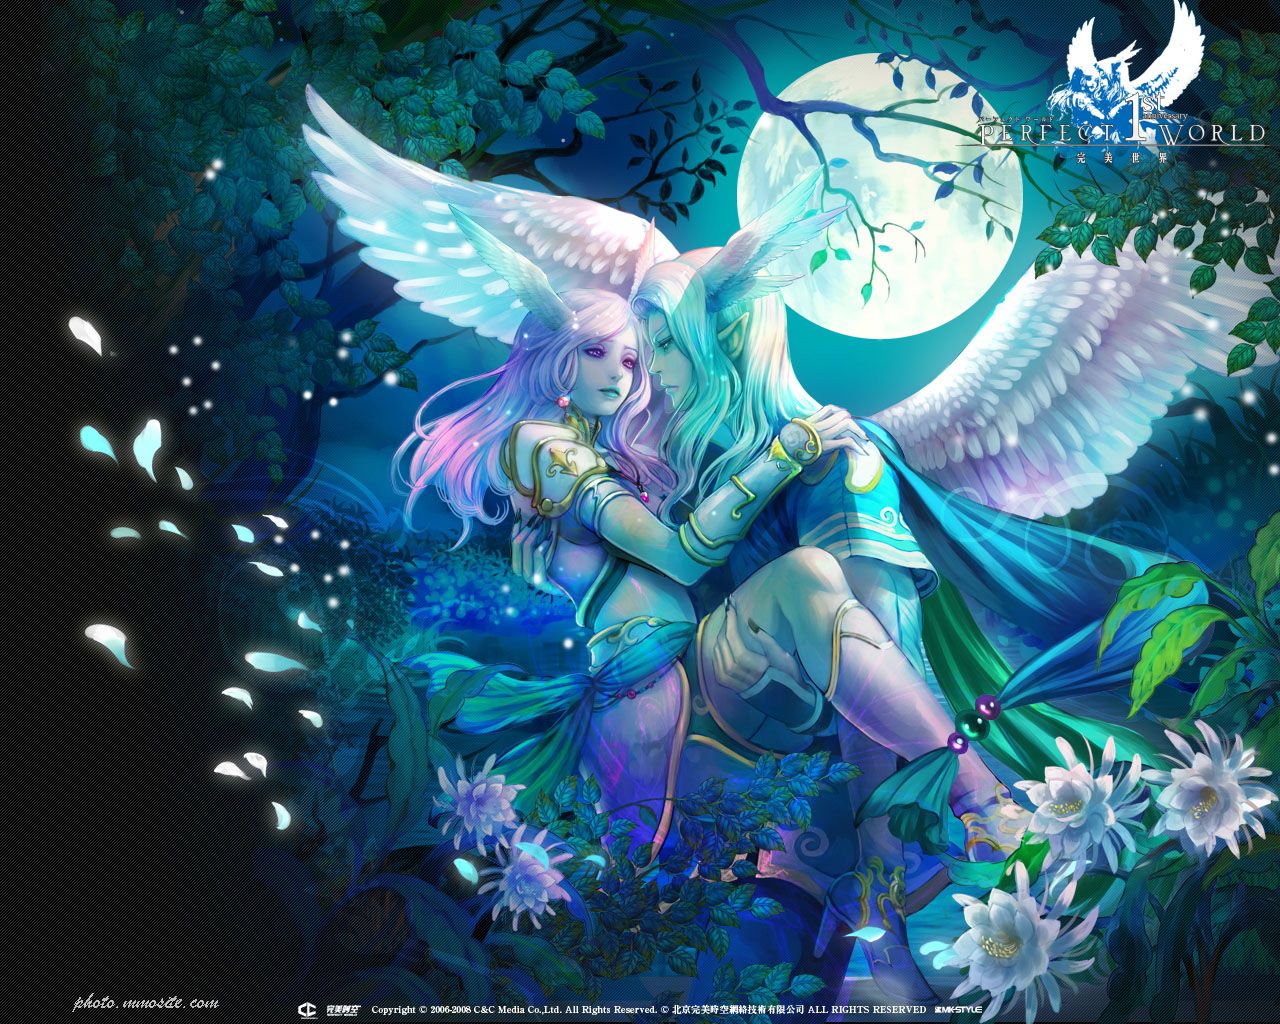 Dreamlike Perfect World Wallpaper - MMORPG Photo News - MMOsite.com